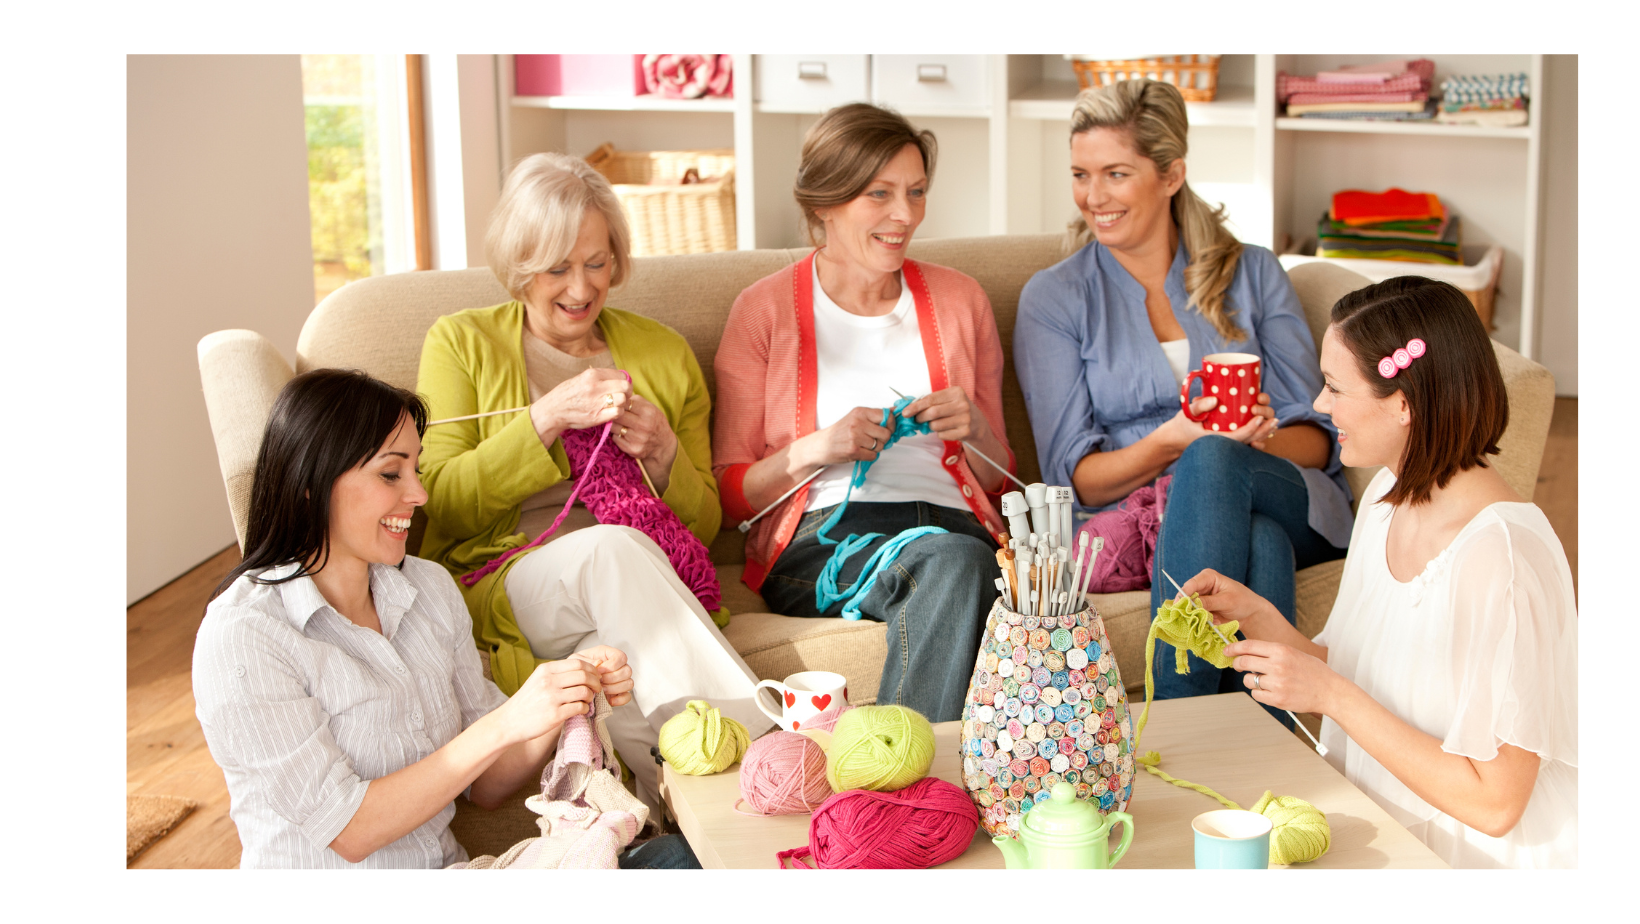 Five women sitting on a sofa, knitting.